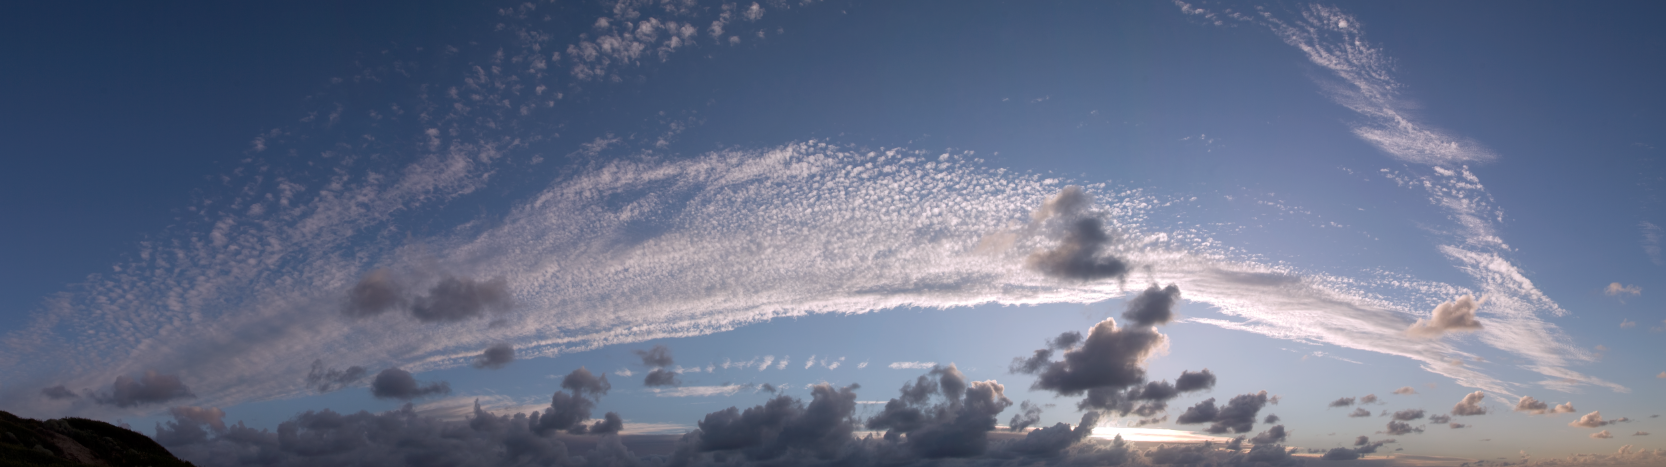 Sky over Inverloch - Vic